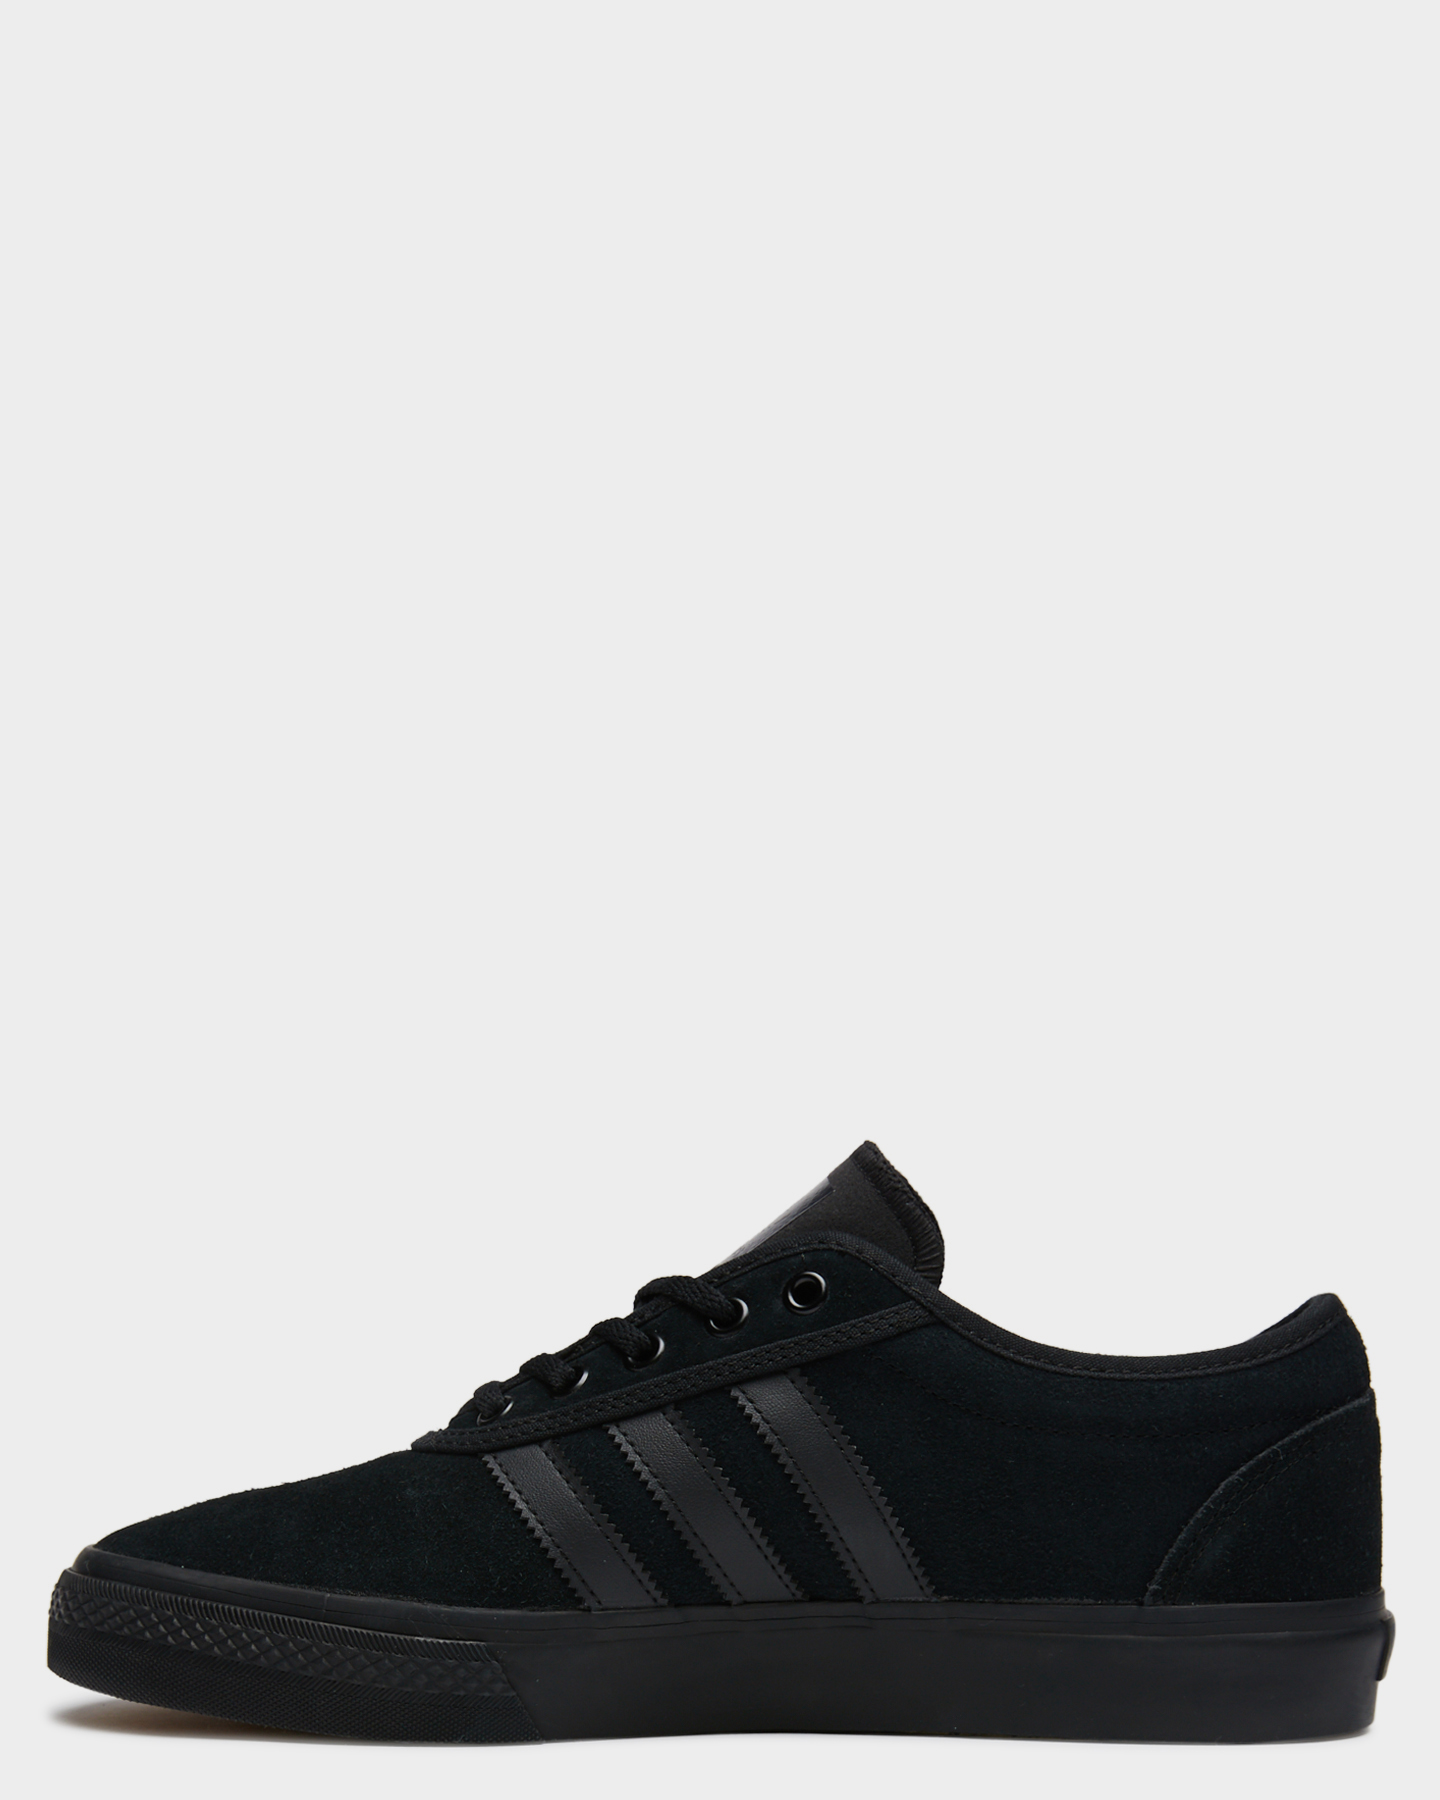 Adidas Adi Ease Suede Shoe - Black Black | SurfStitch